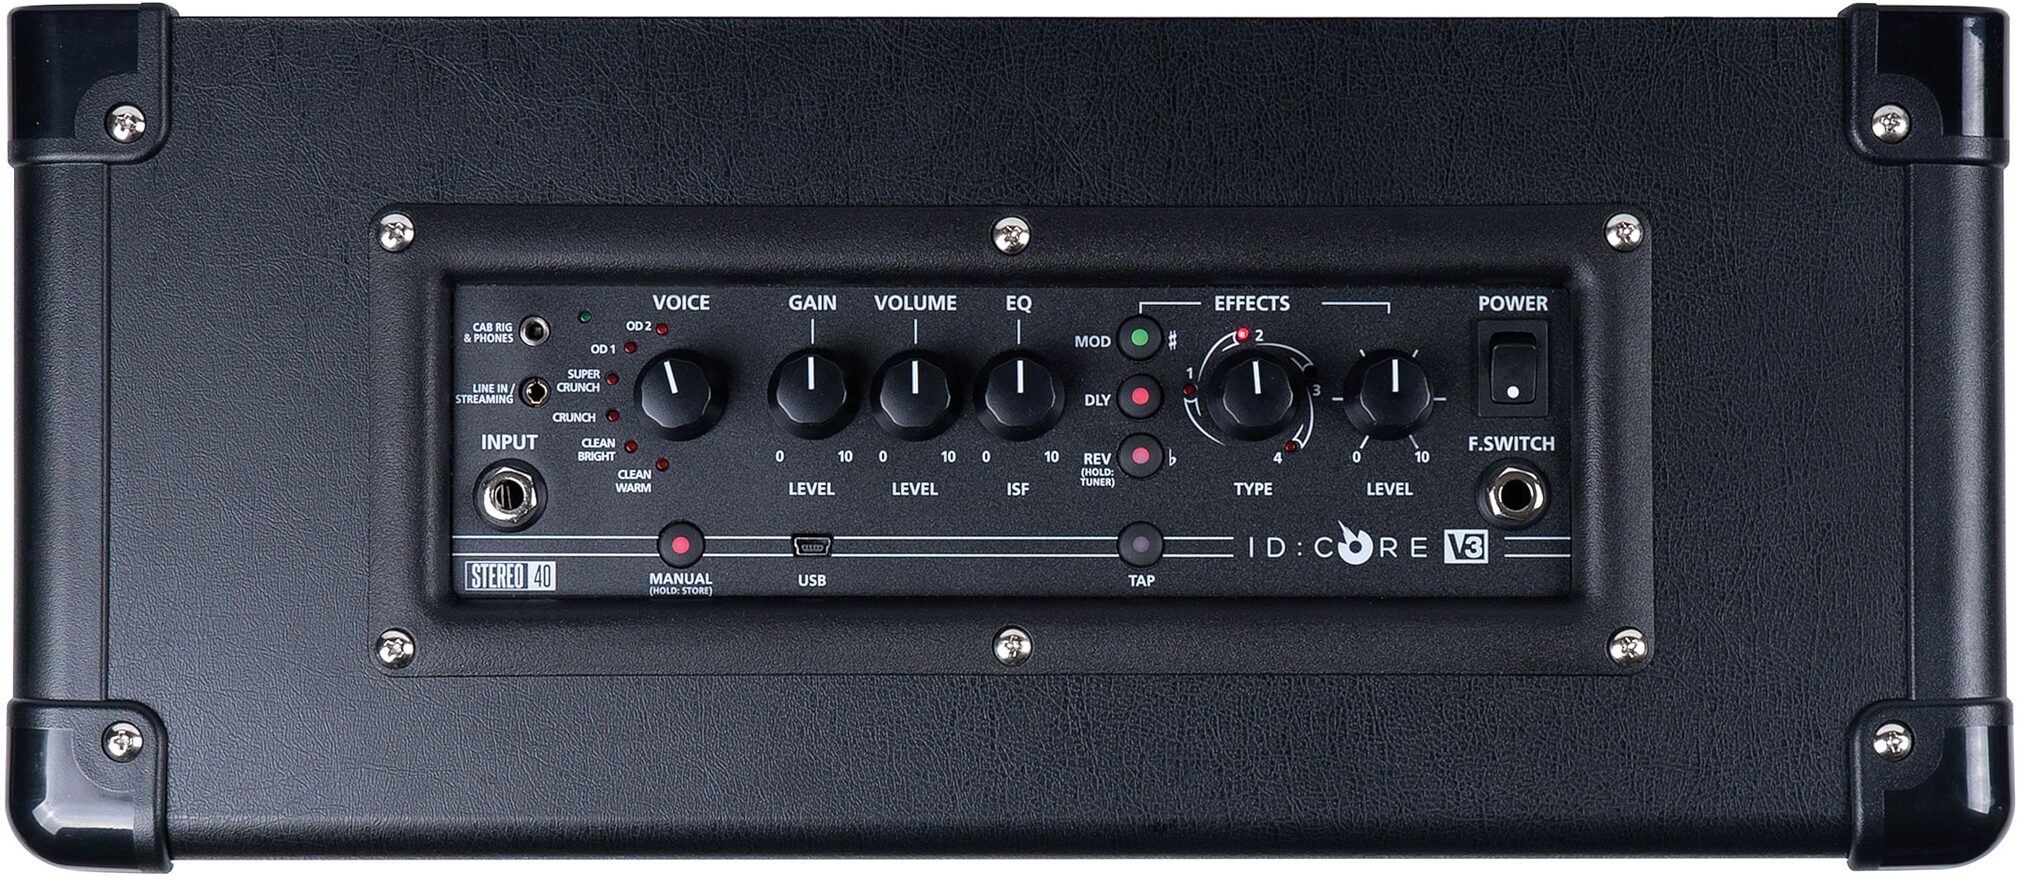 Blackstar ID:CORE V3 Stereo 40 Digital Amplifier (40 Watts)